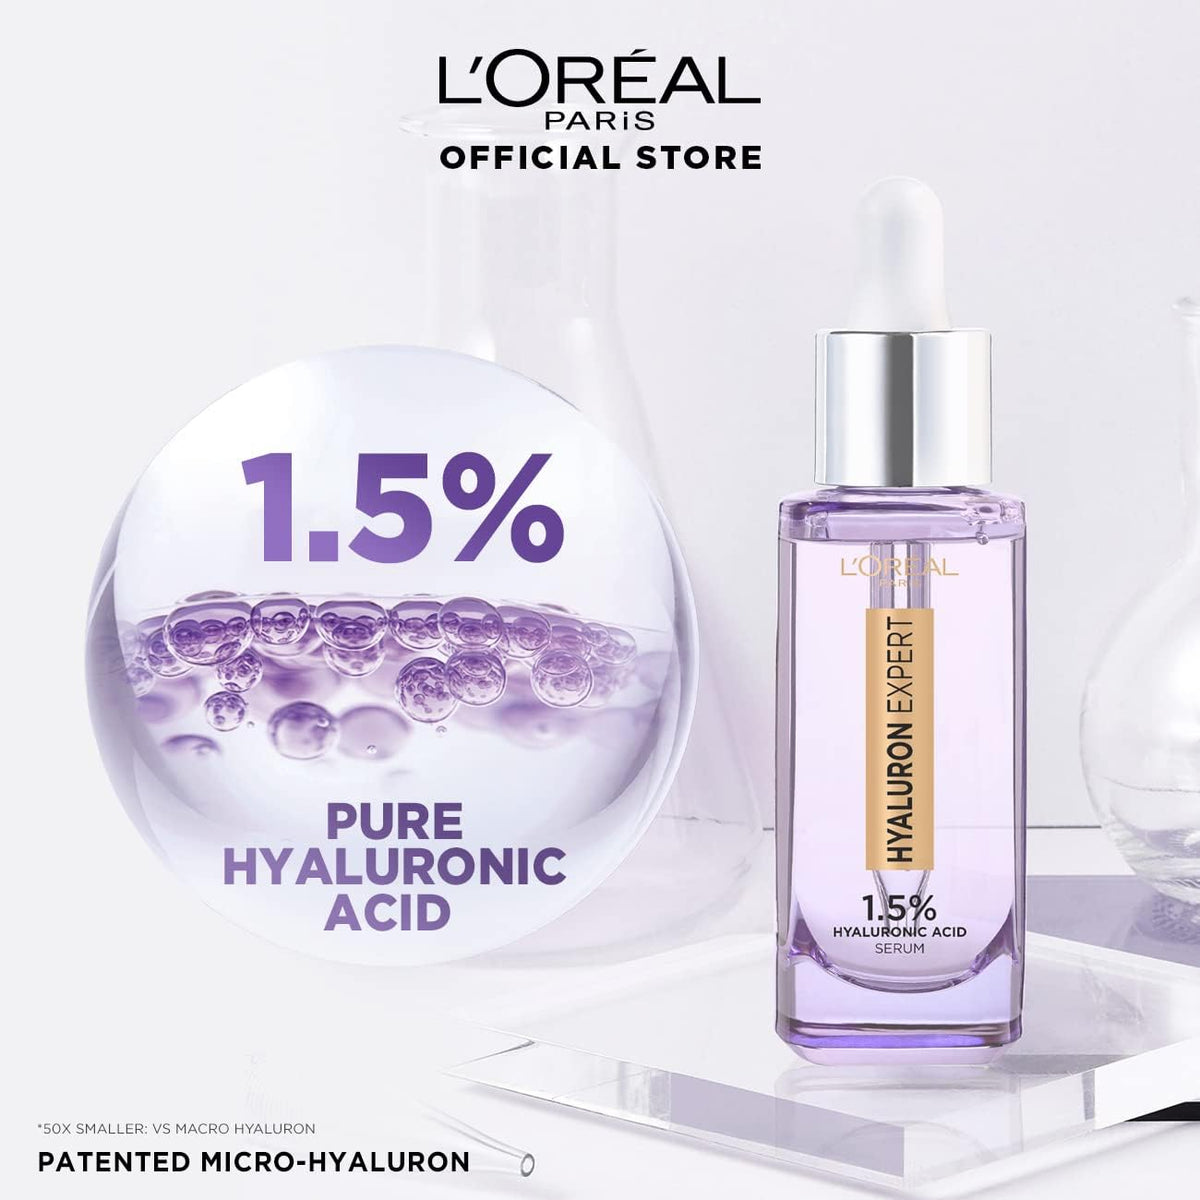 L'Oréal Paris 2.5% Hyaluronic Acid and Caffeine Eye Serum, 20 ml, clear